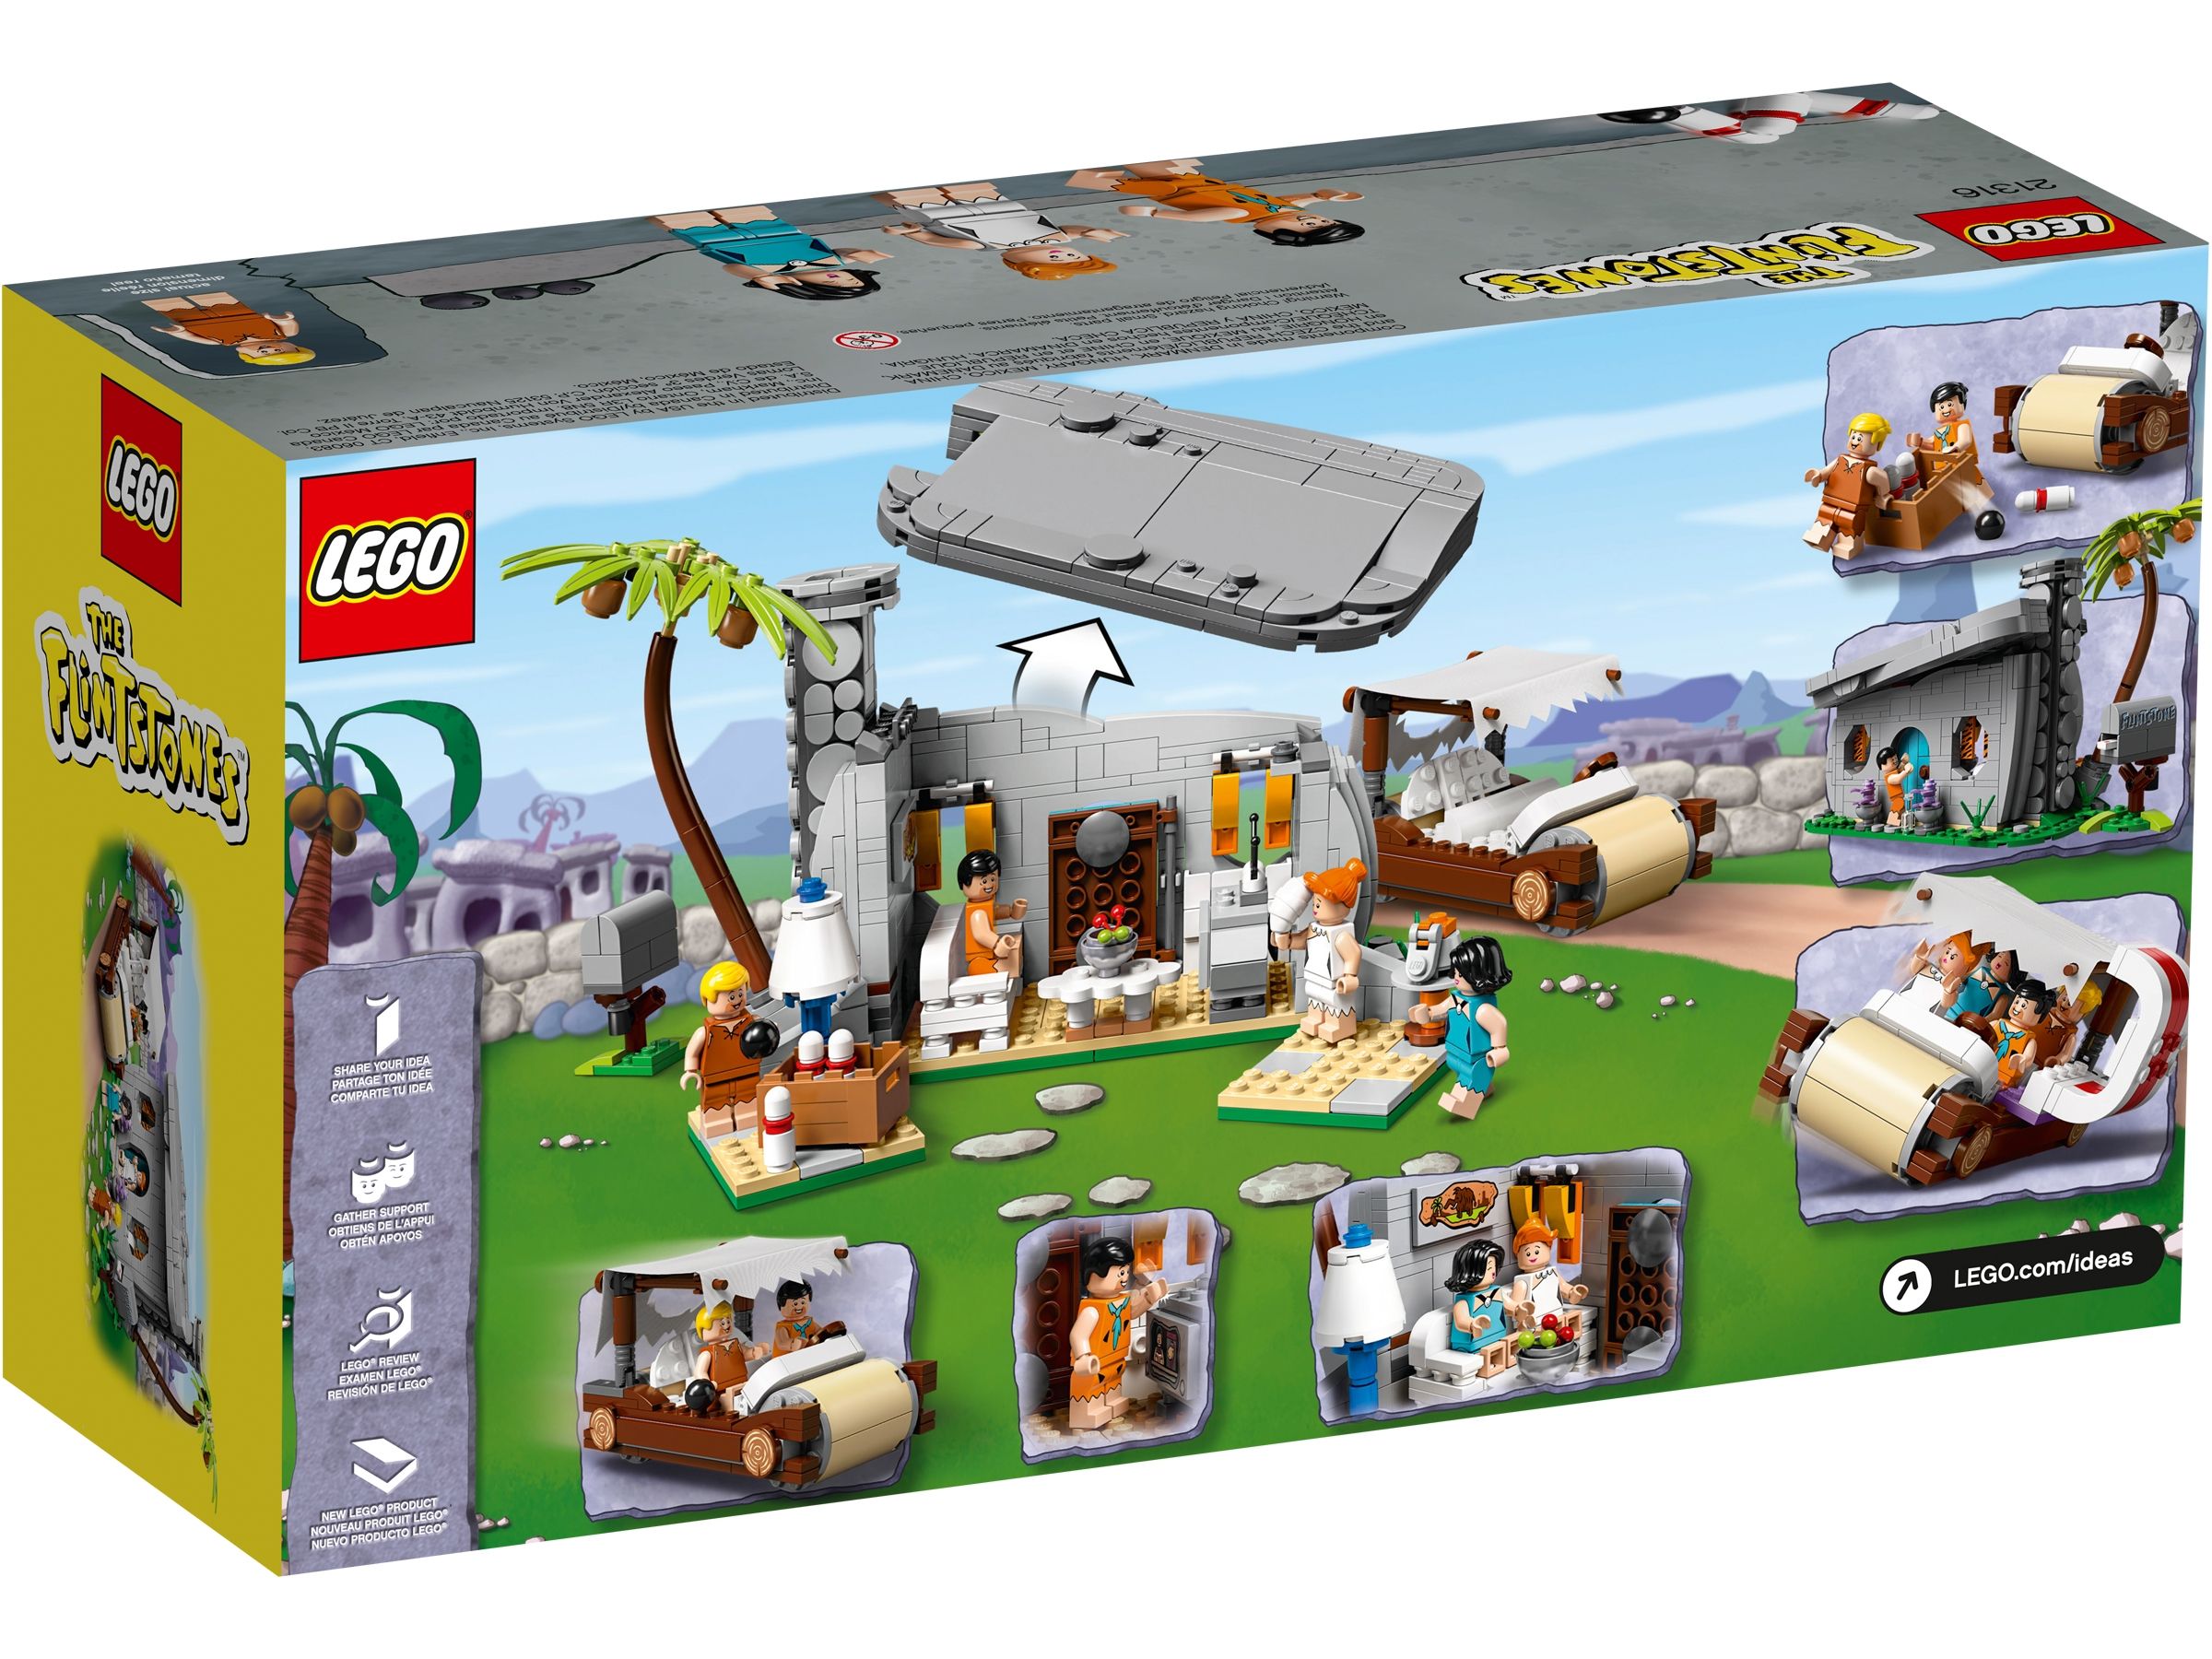 LEGO Ideas 21316 The Flintstones - Familie Feuerstein LEGO_21316_Box5_v39.jpg